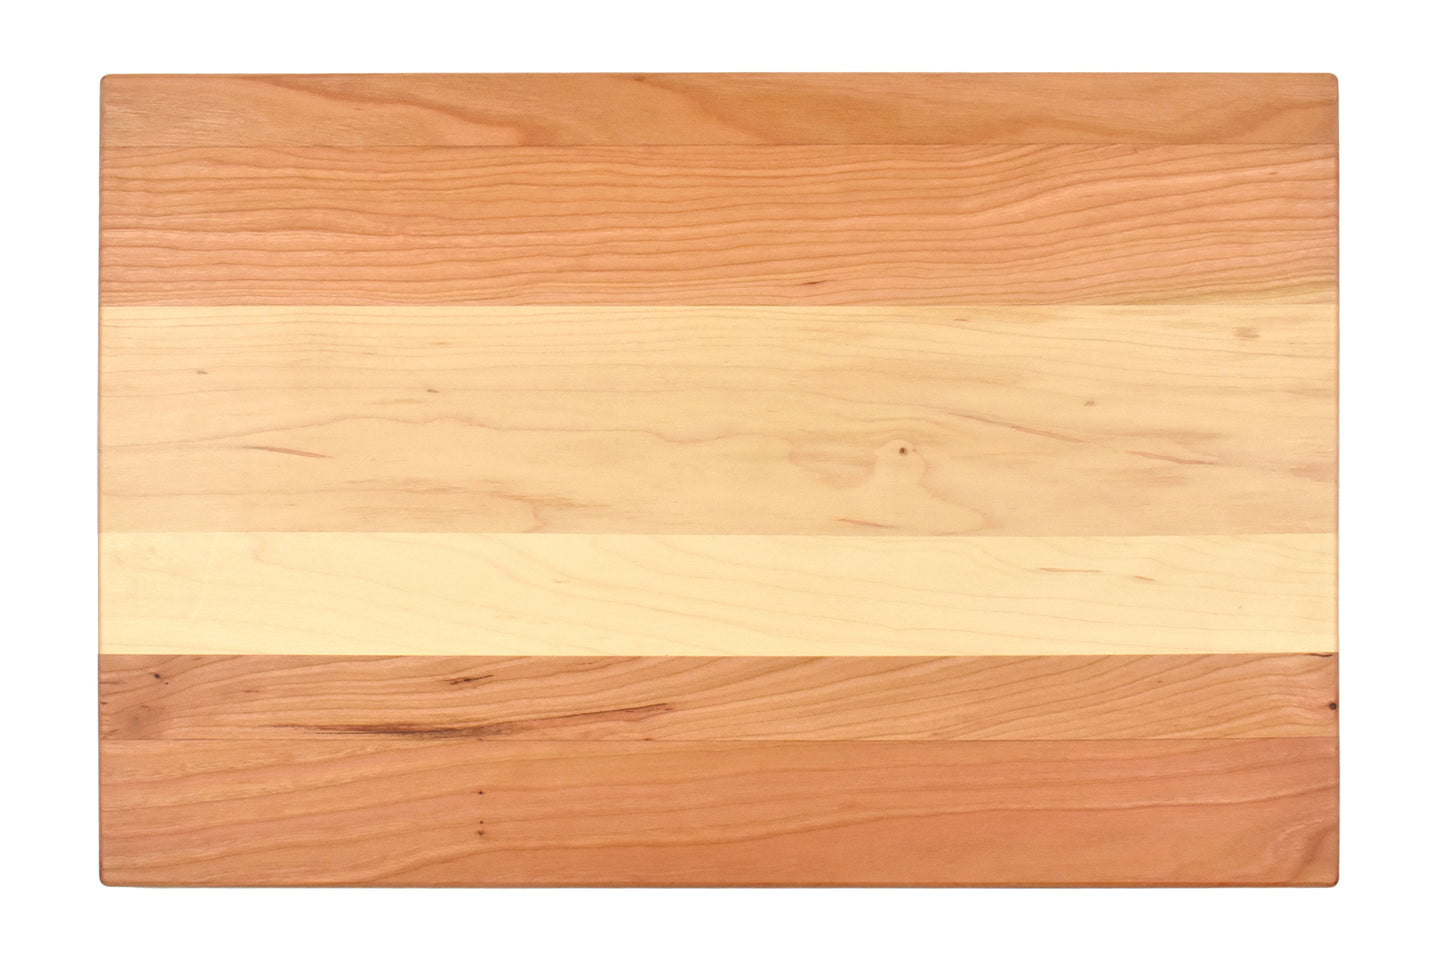 Large Multi-Species Wood Cutting Board